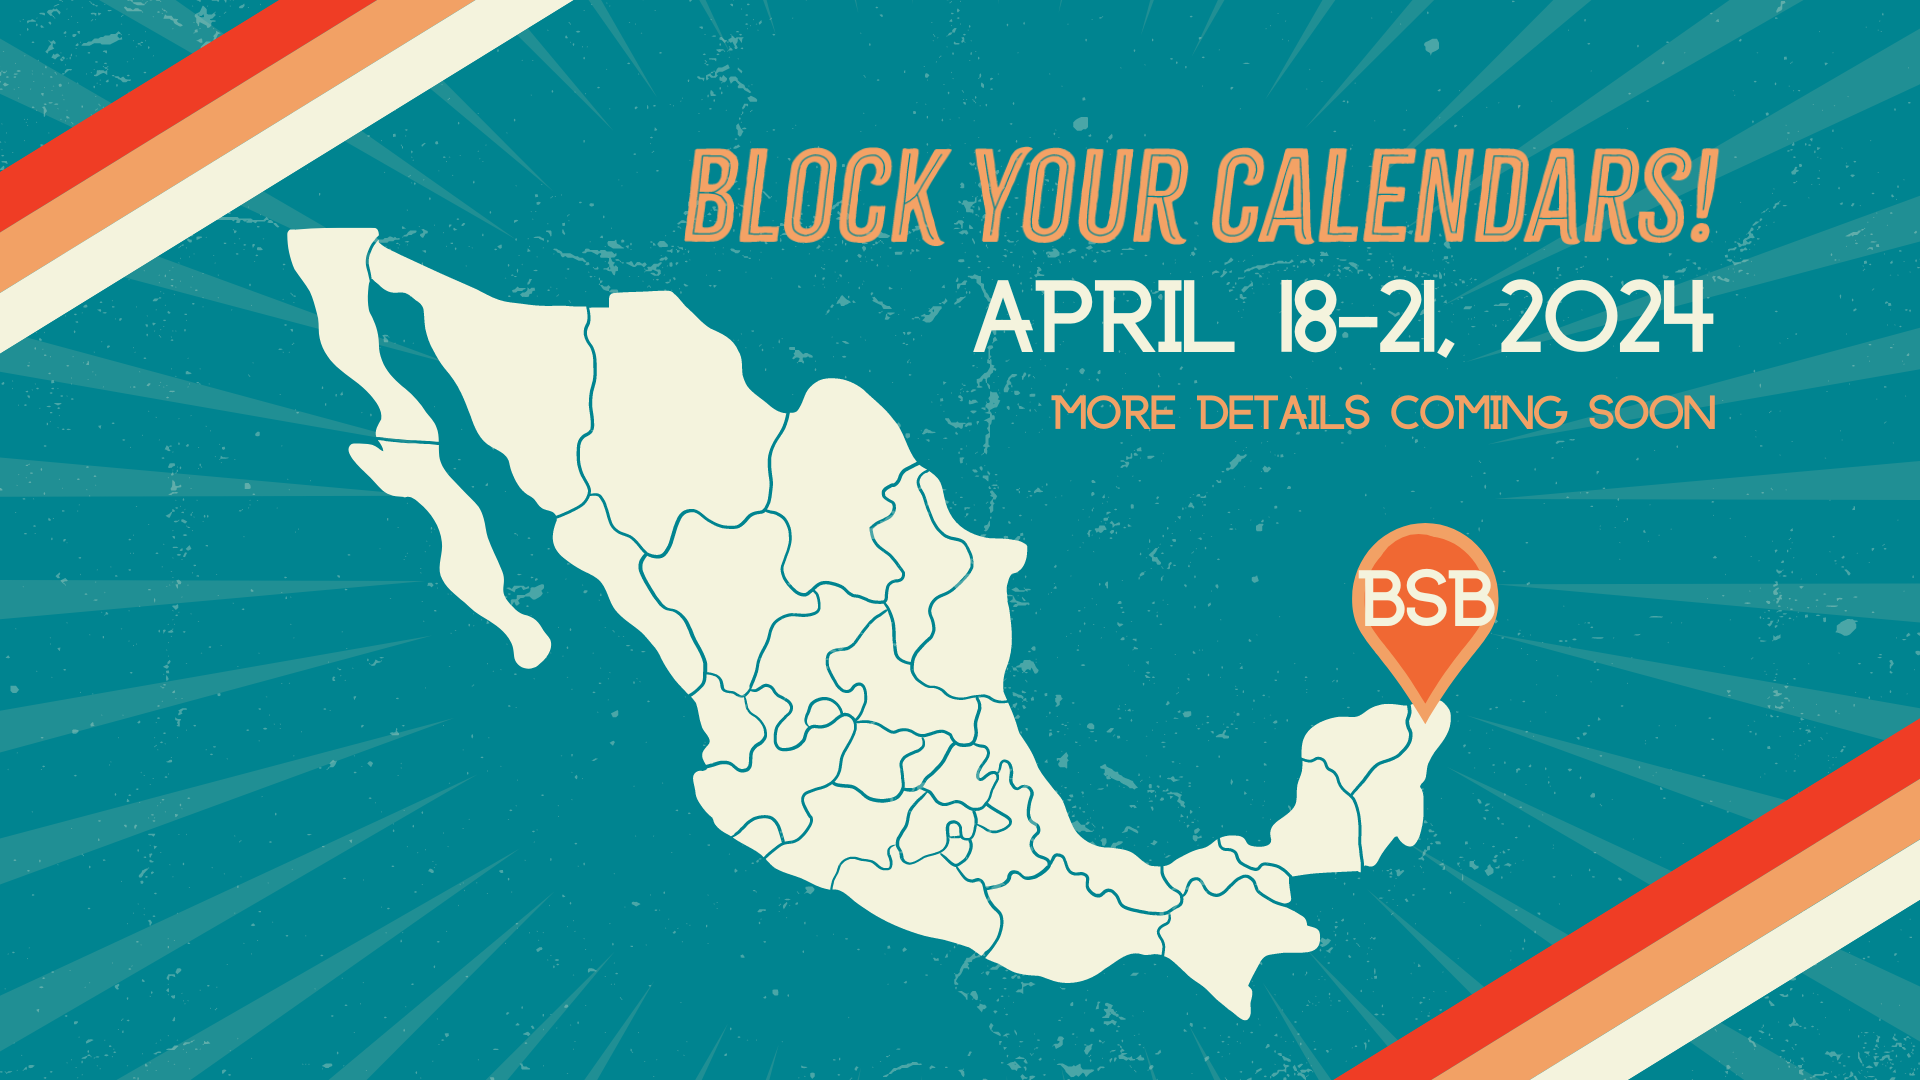 BSB Cancun April 18-21